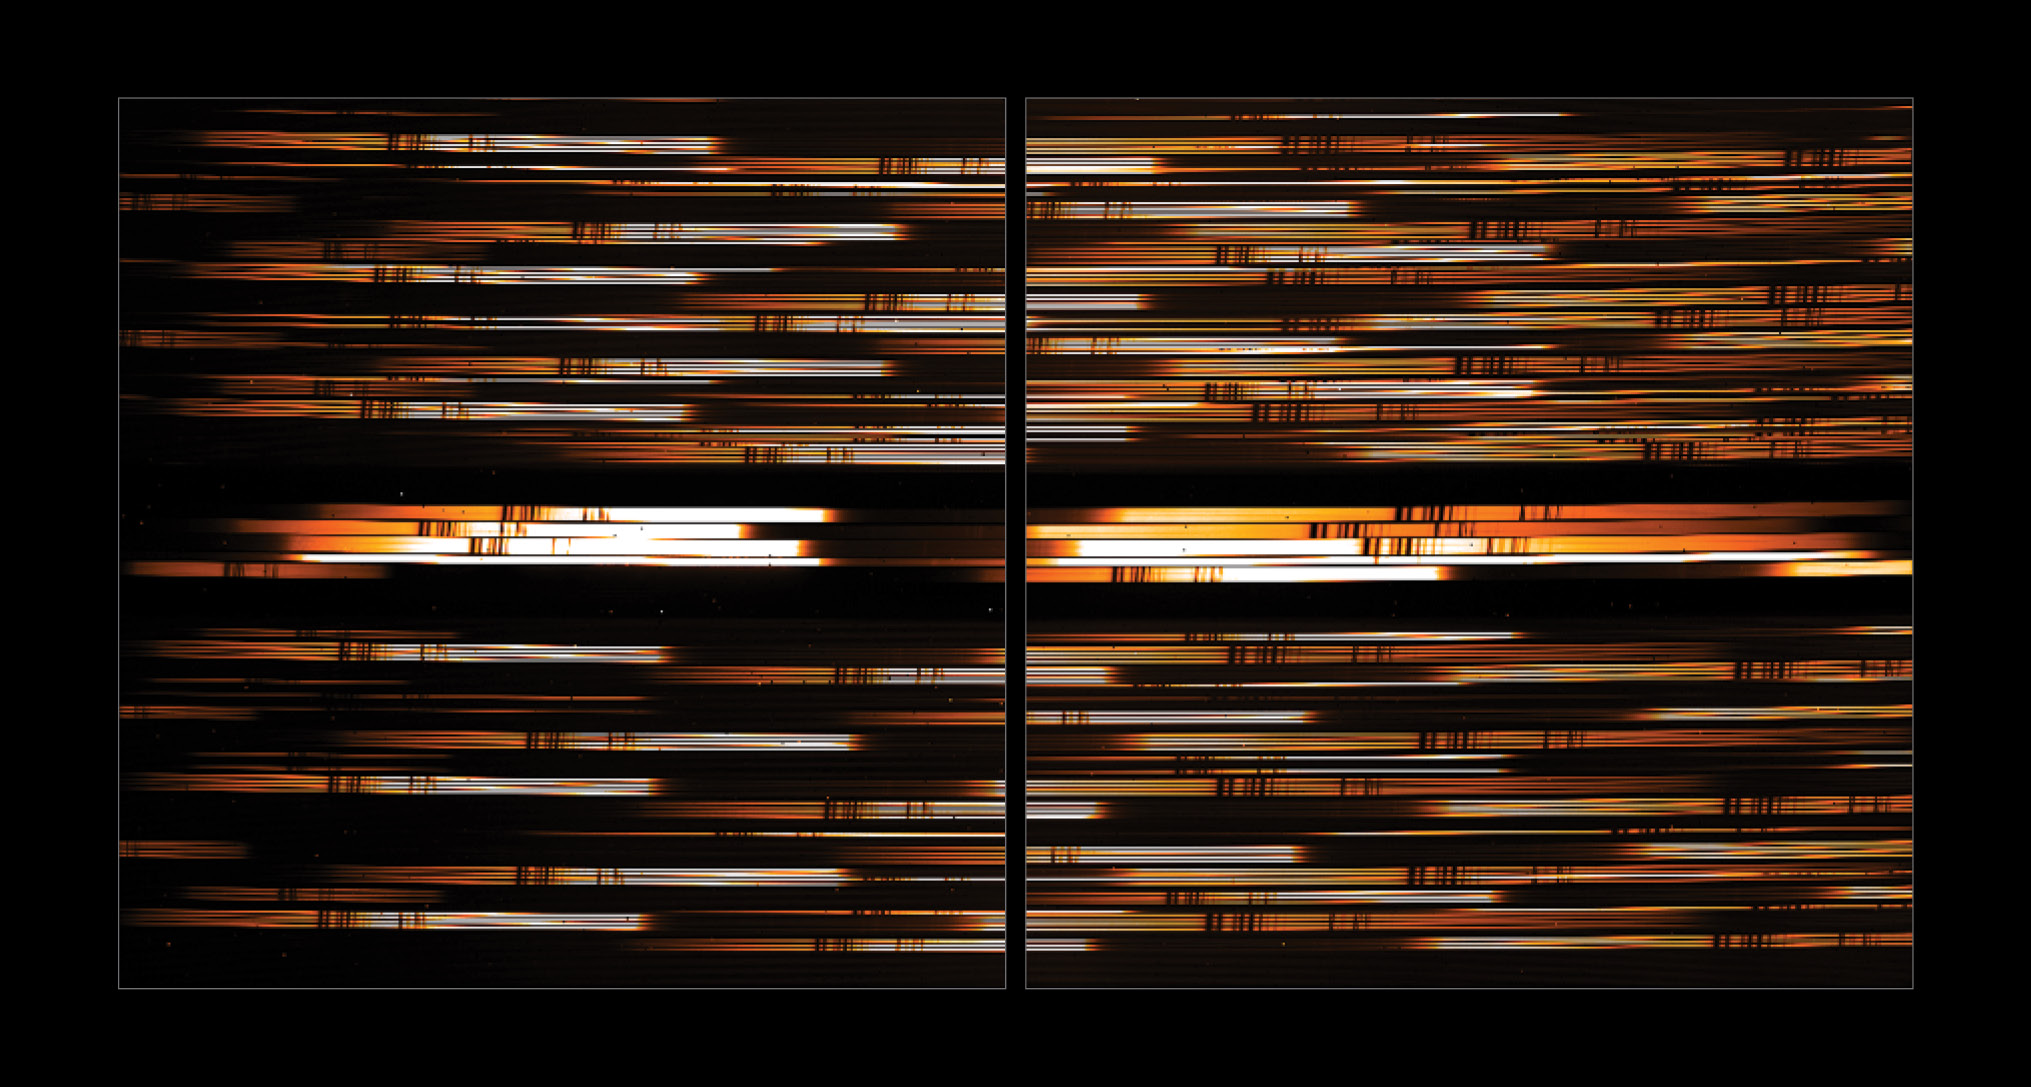 Multiple spectra in one image. Credit: https://webb.nasa.gov/